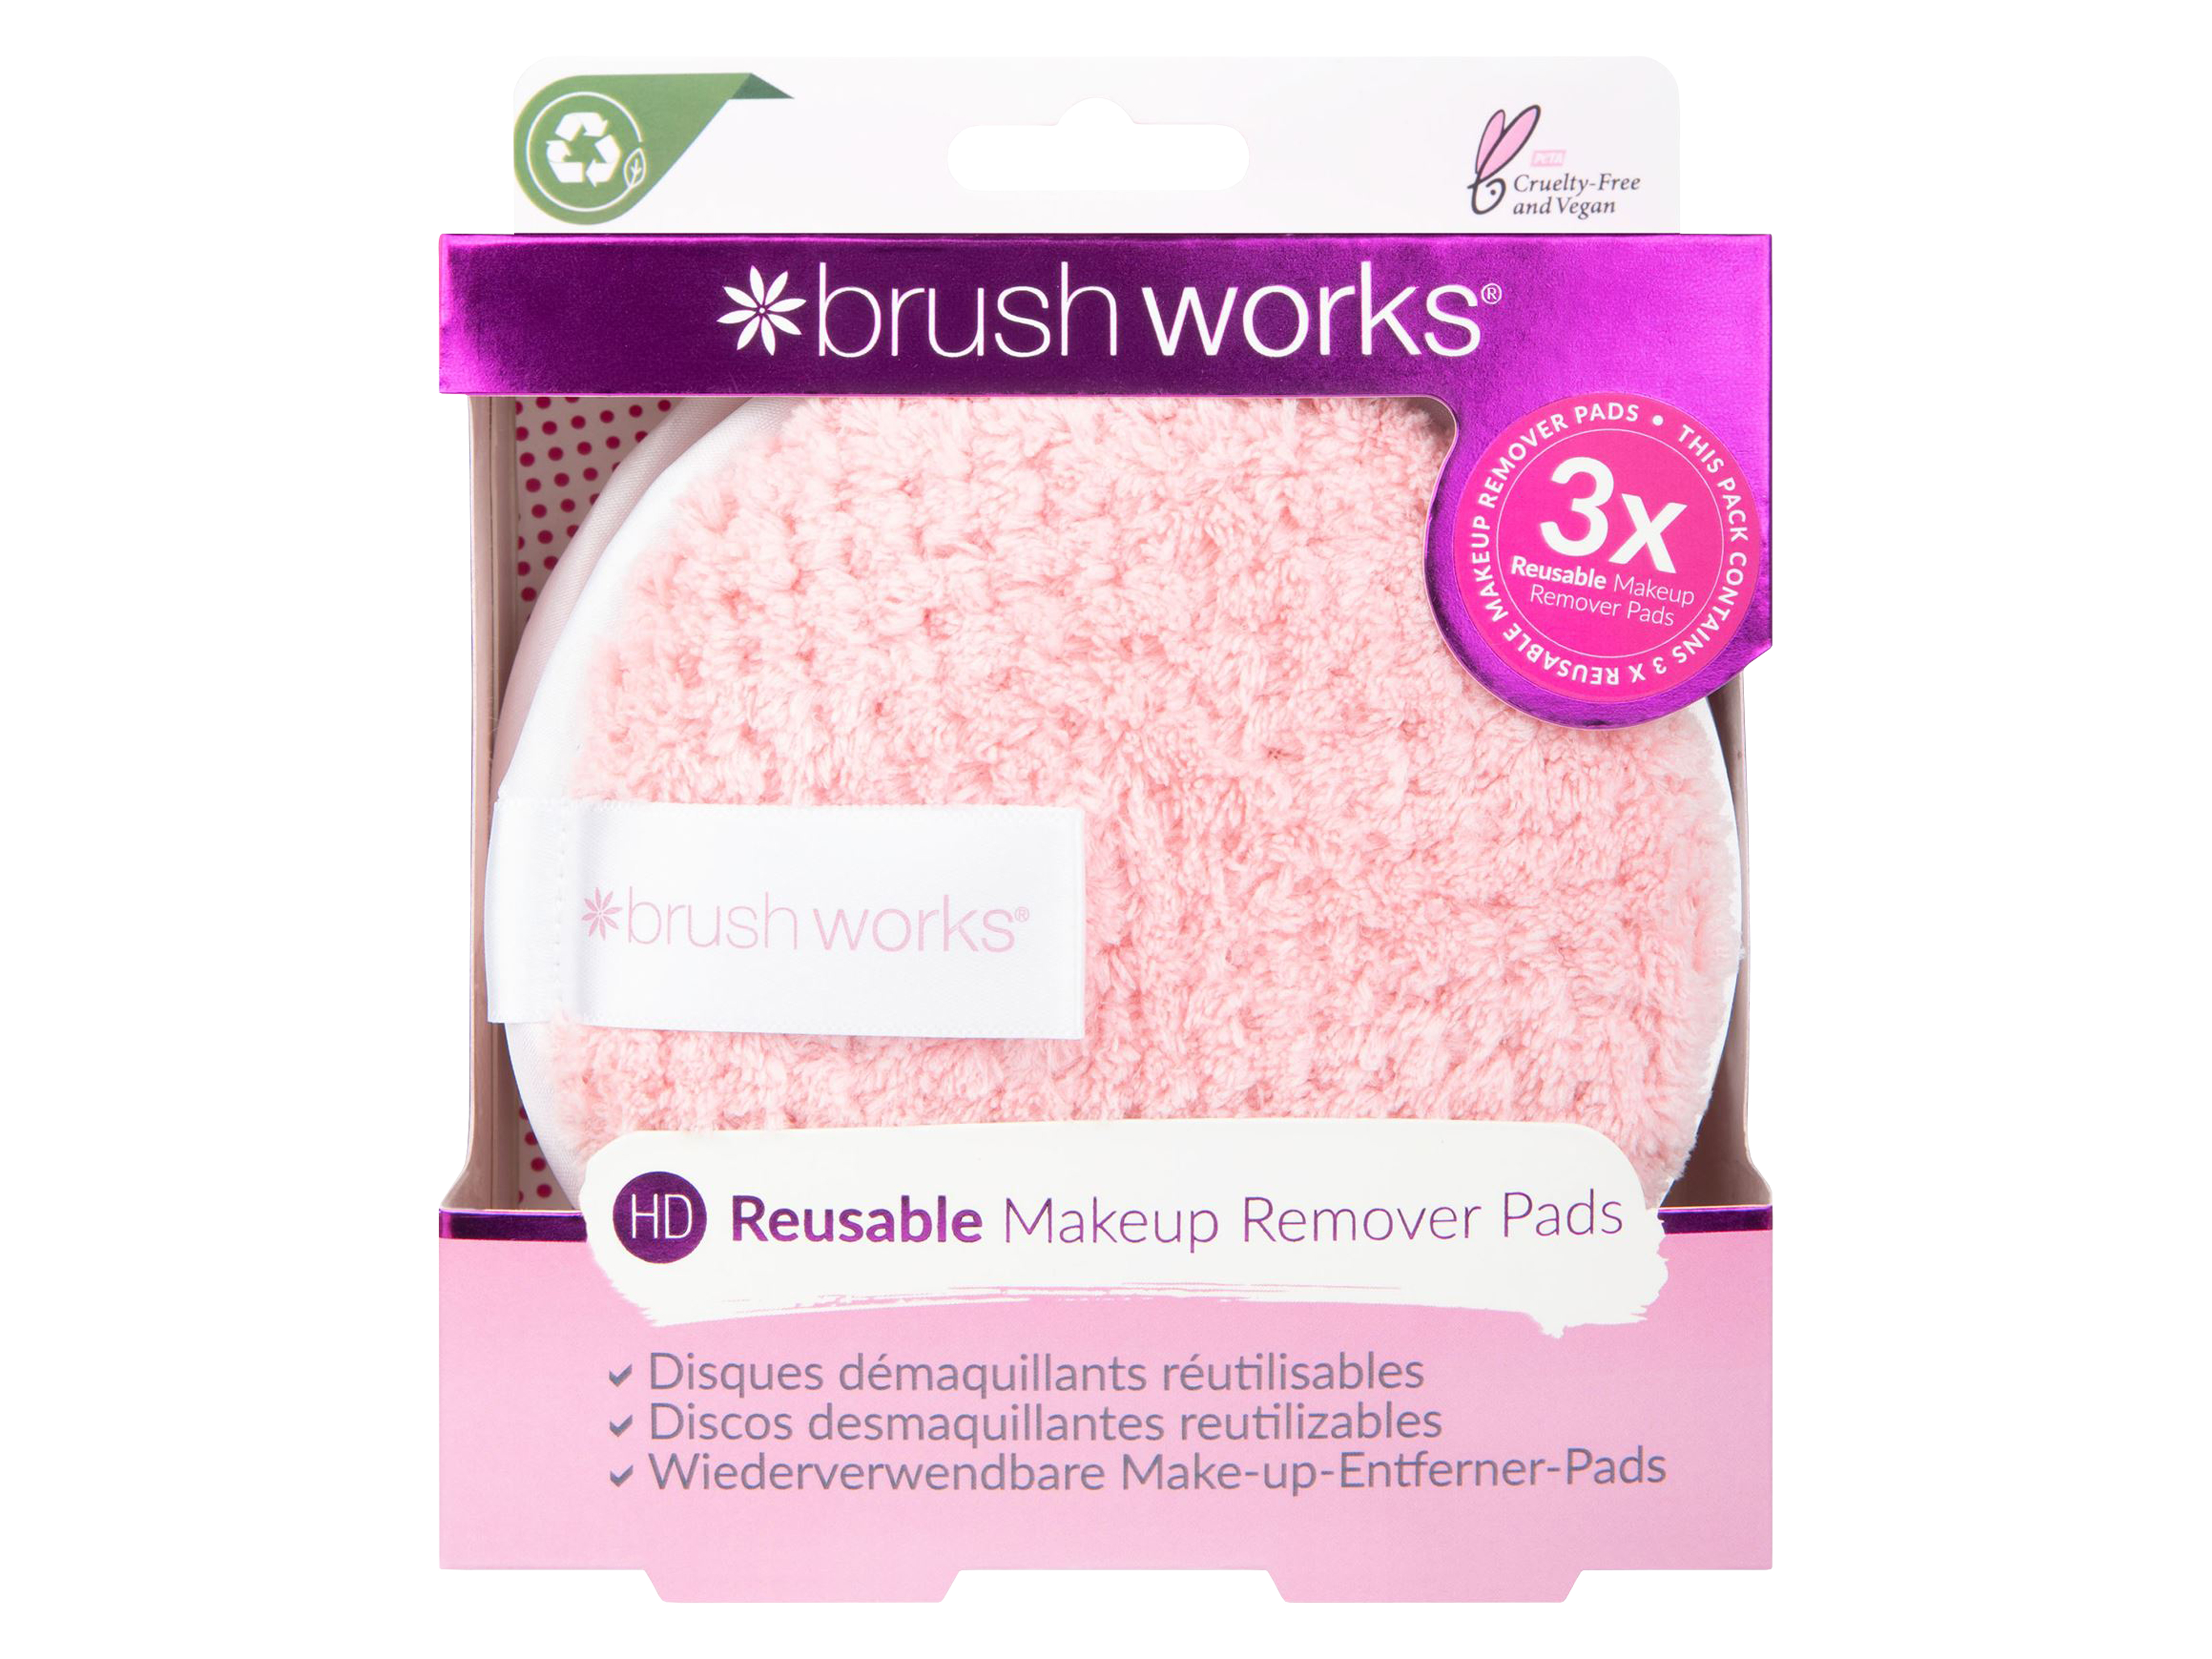 Brushworks HD Reusable Makeup Remover Pads, 3 stk